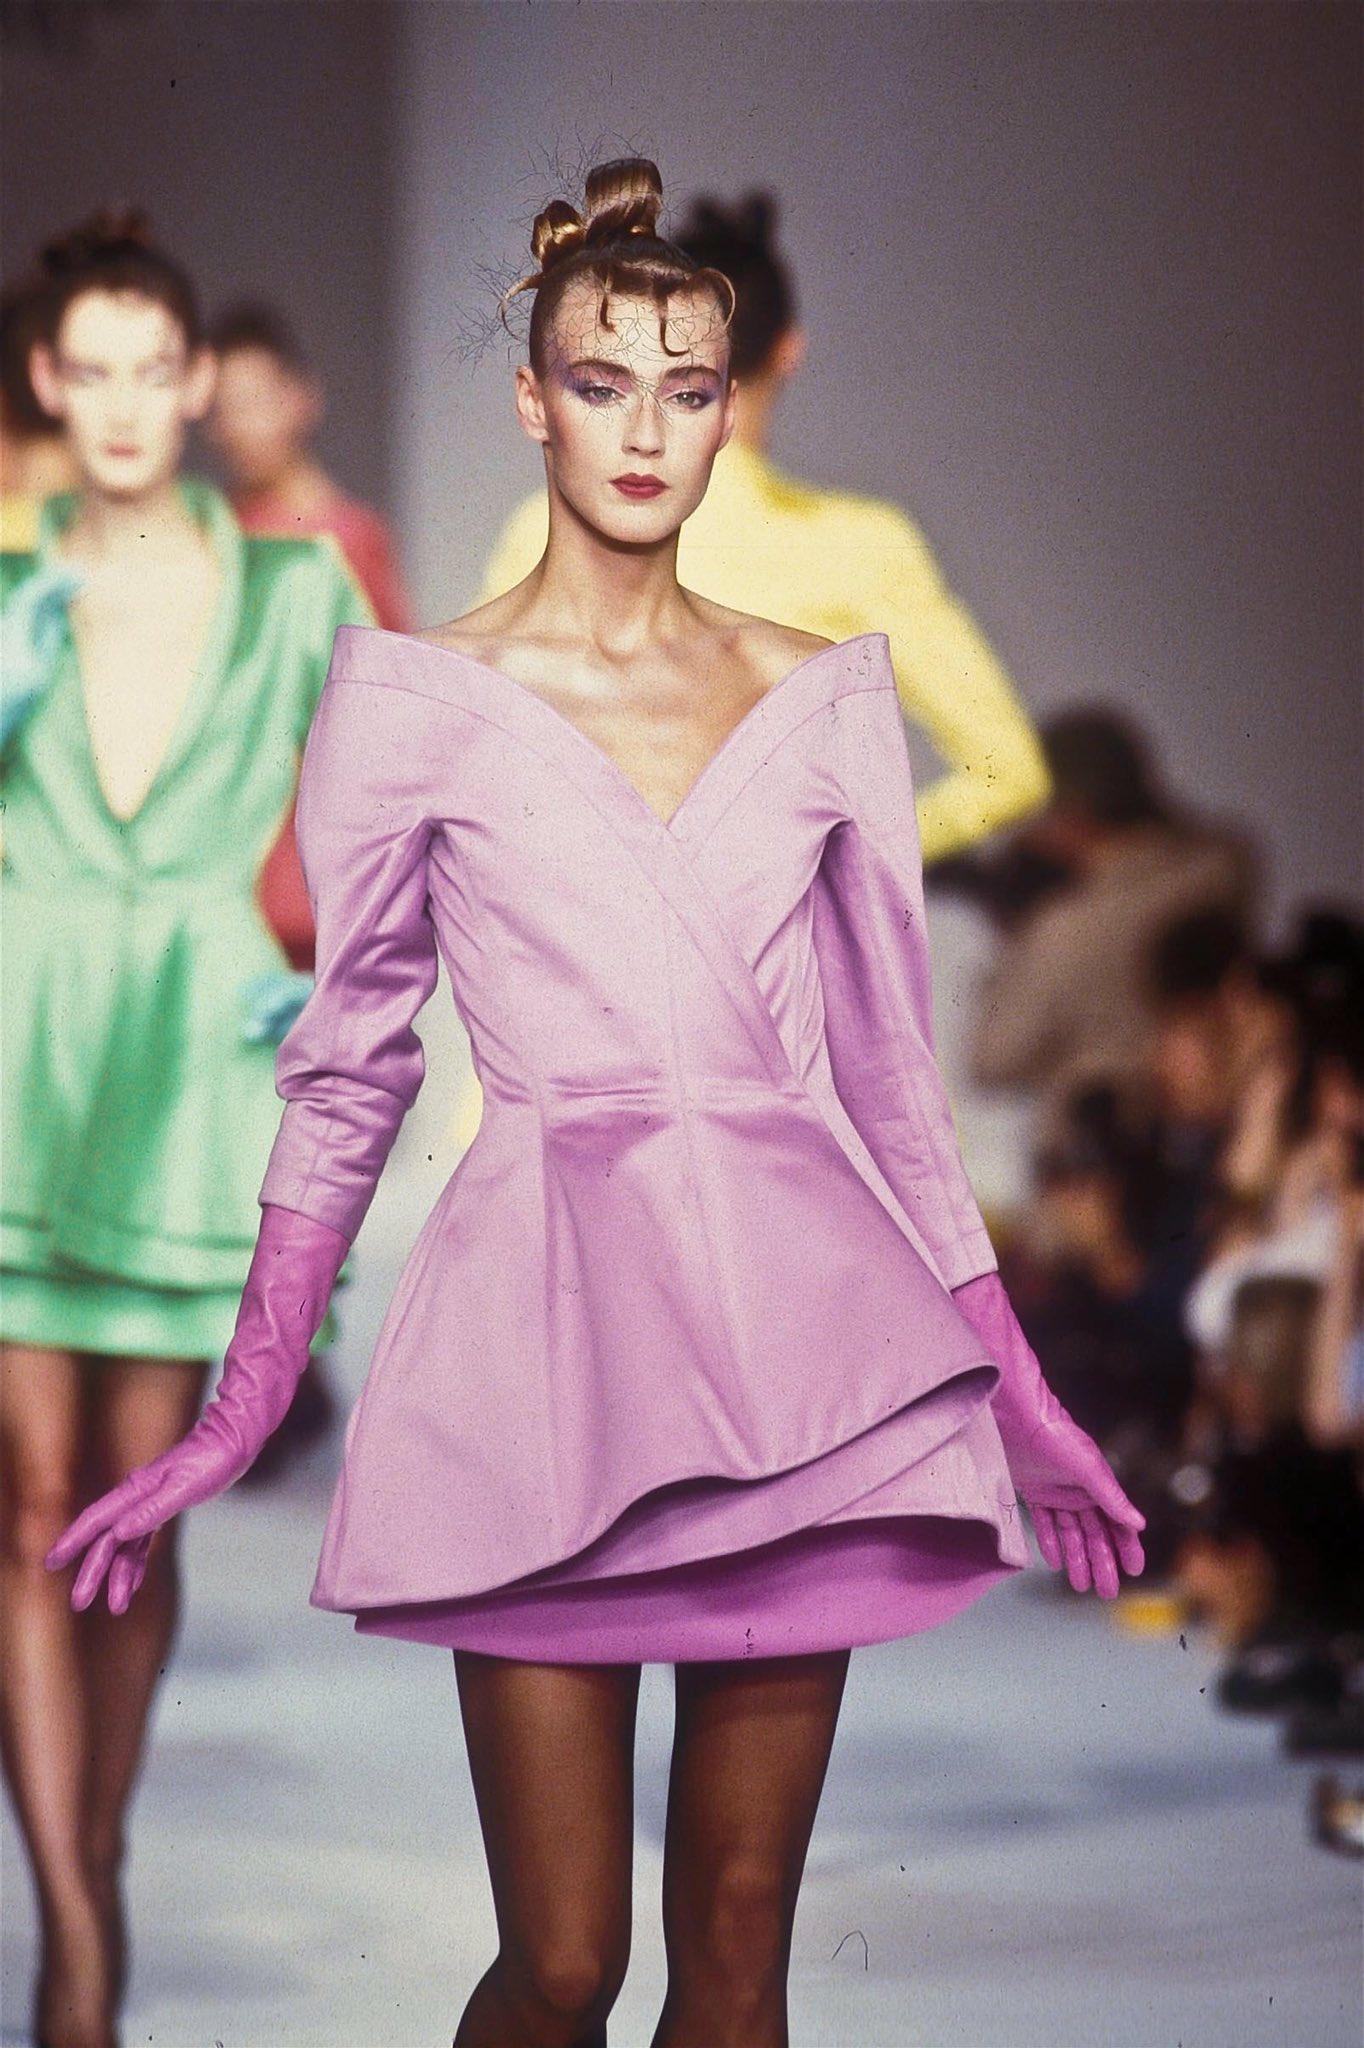 1988 dress style